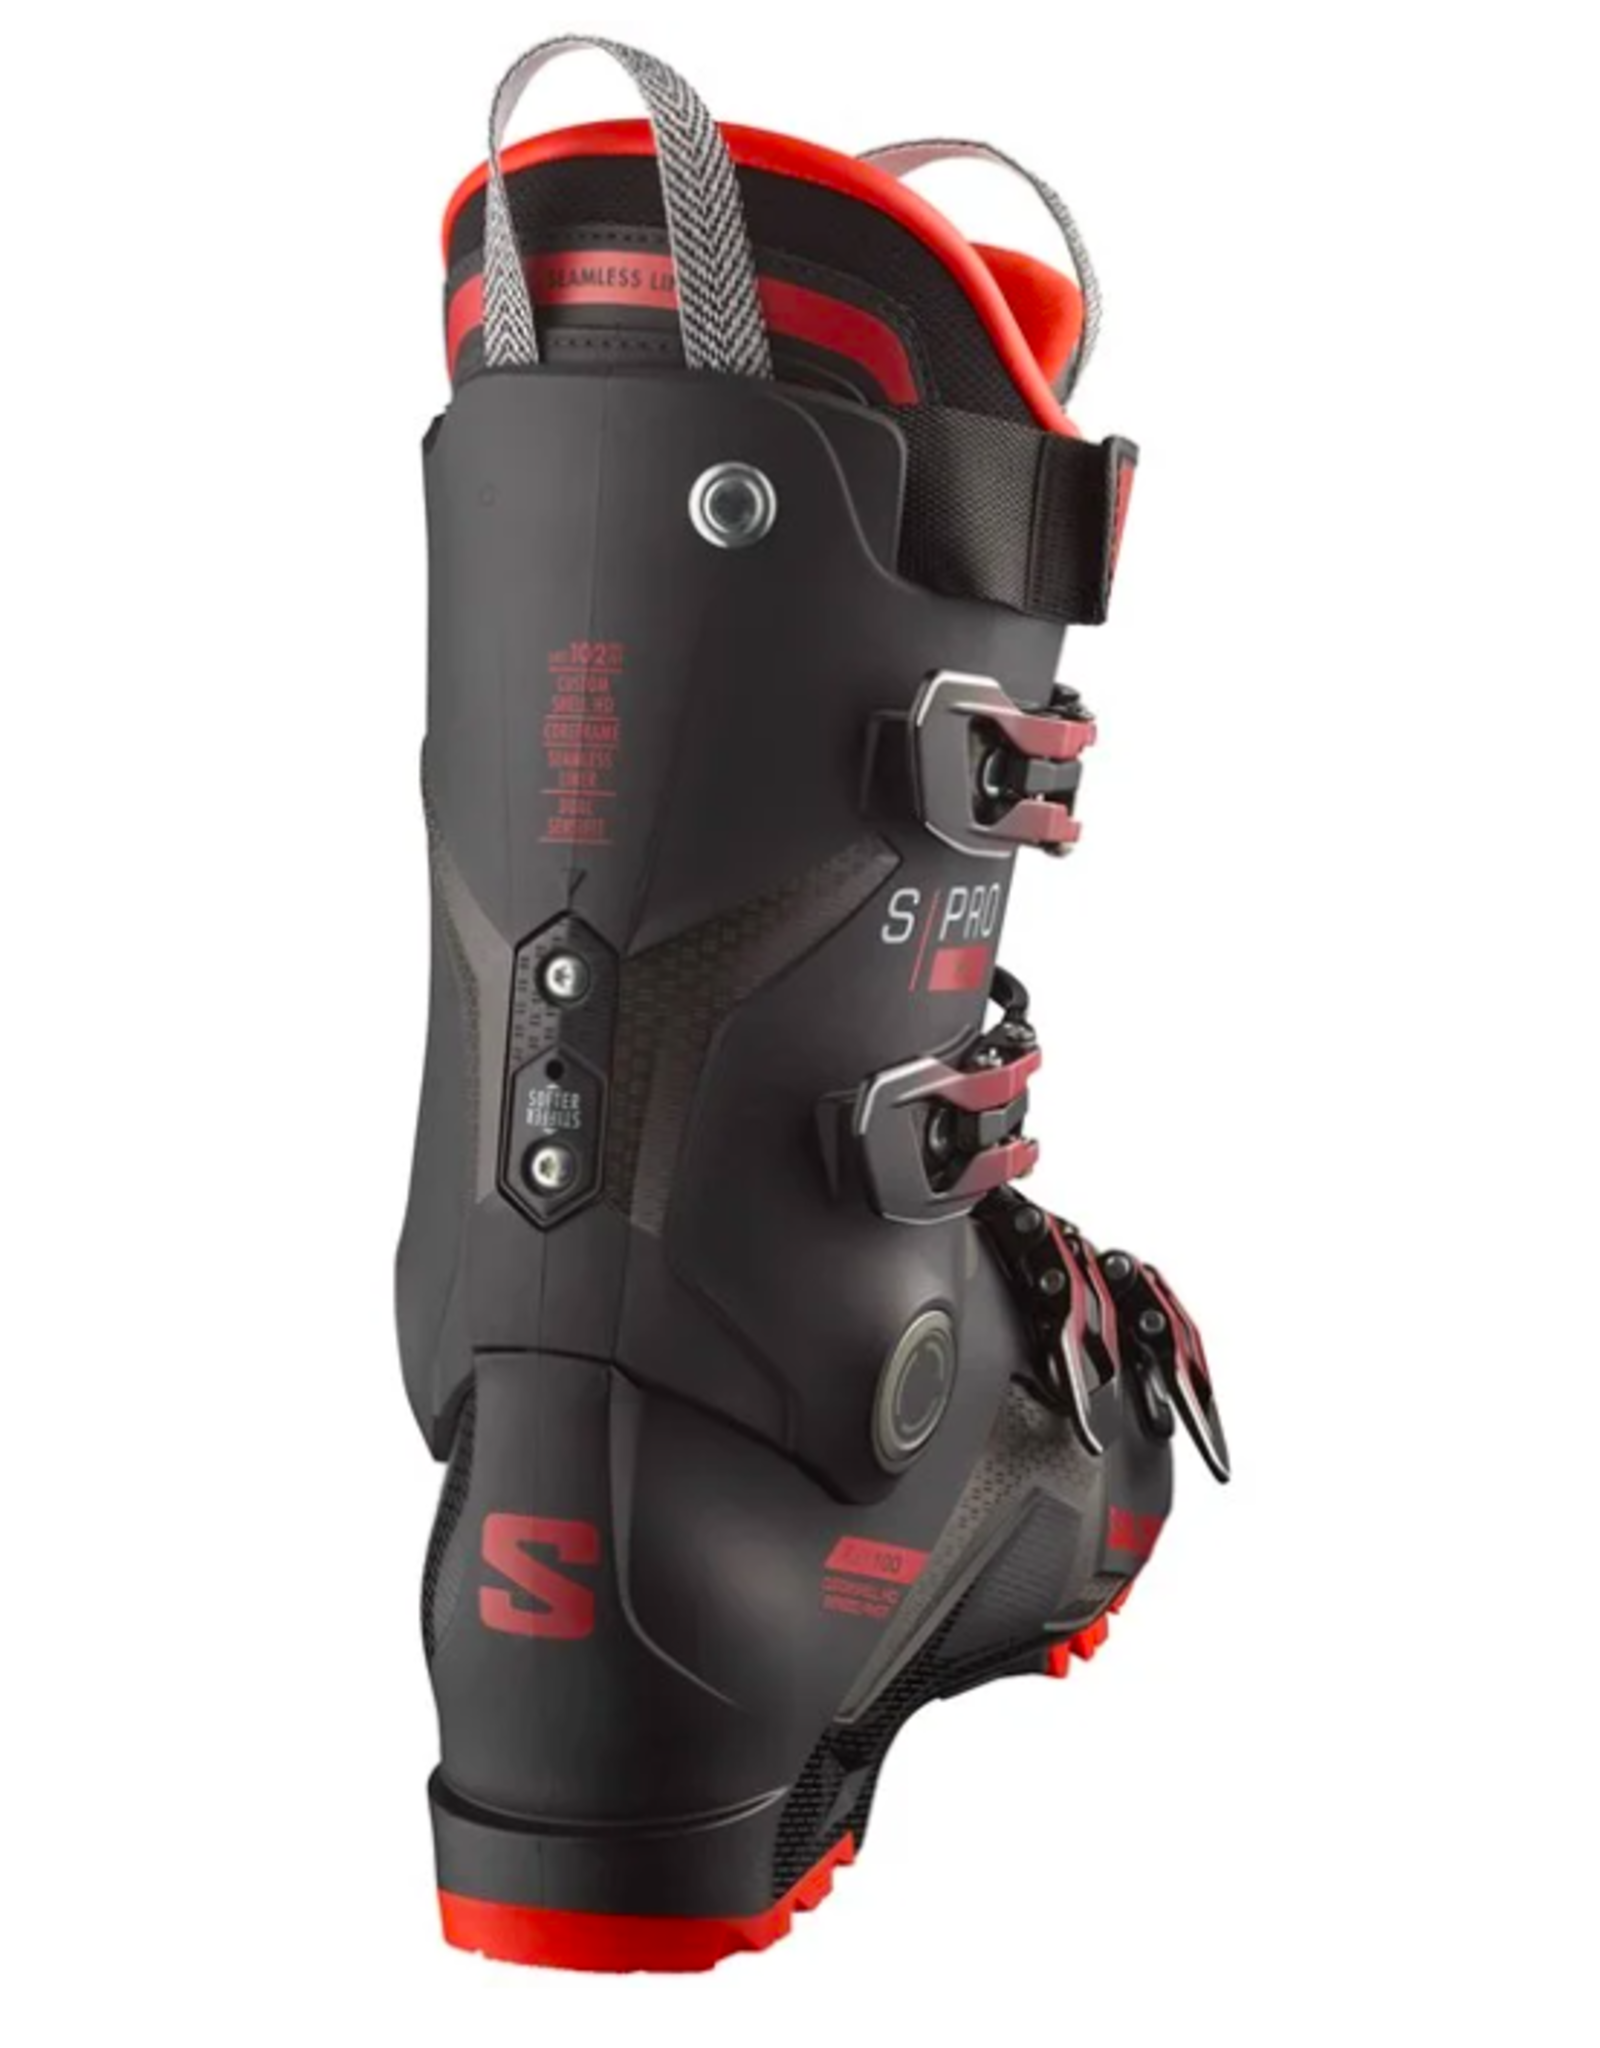 Salomon Men's S/Pro HV 100 GW Ski Boots Black/Red/Beluga 2024